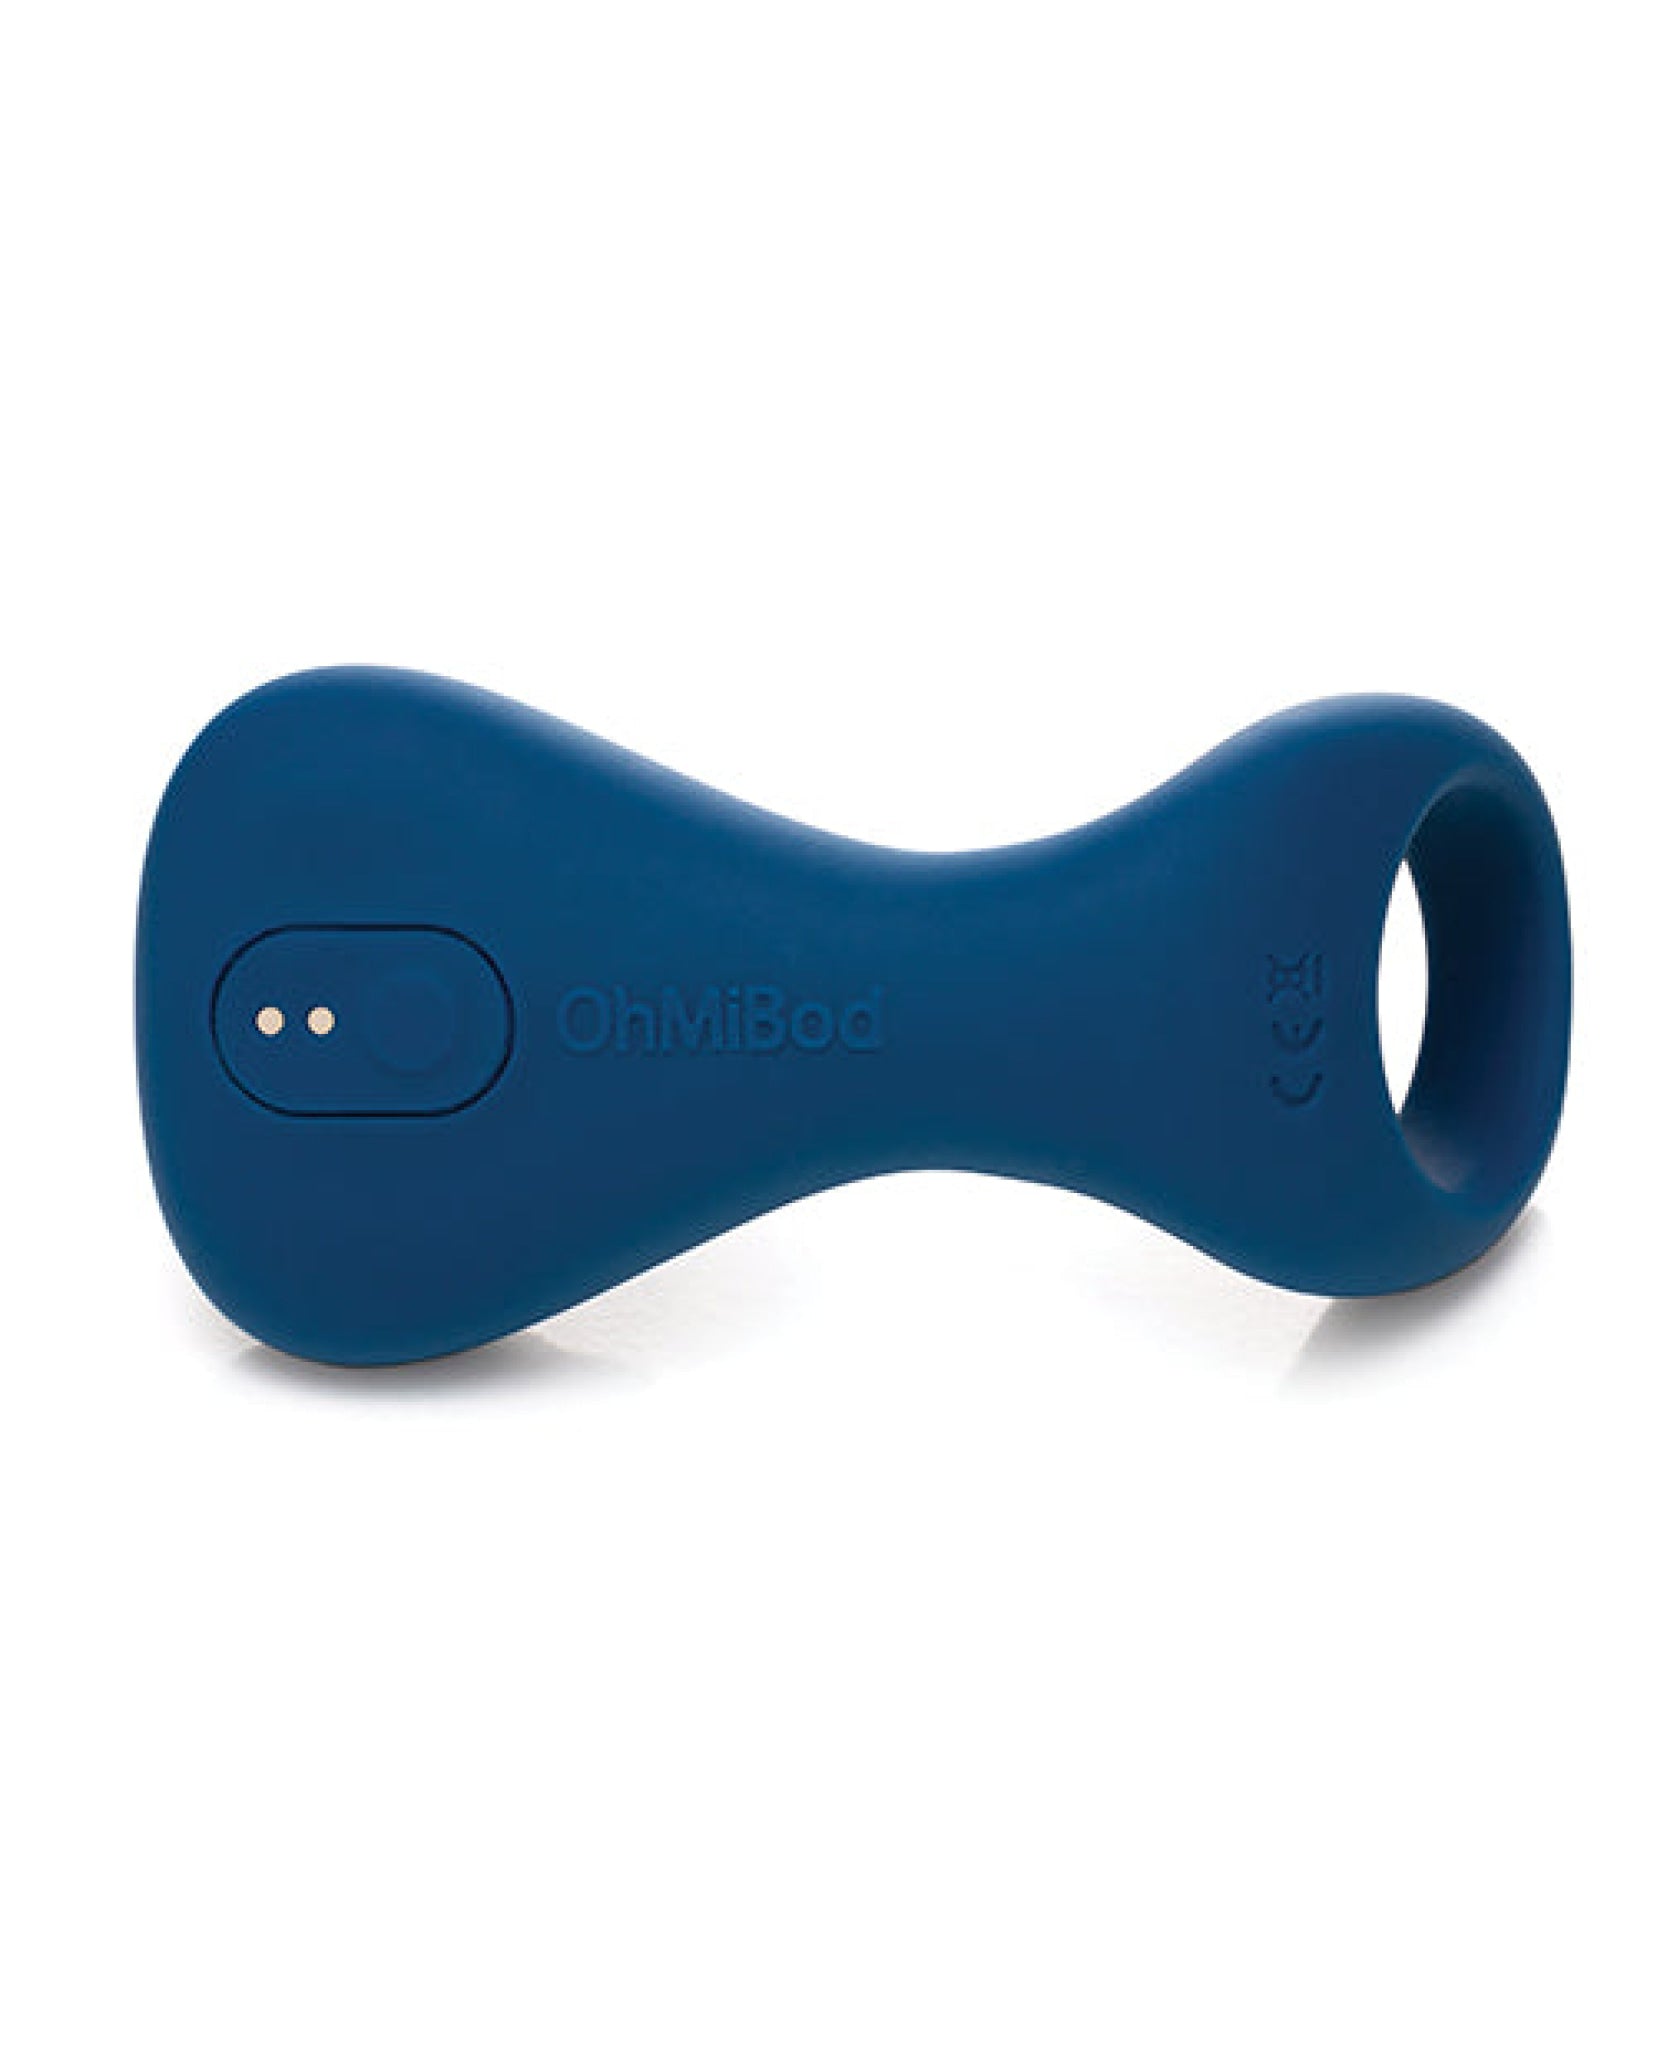 Ohmibod Blue Motion Nex 3 Bluetooth Couples Ring - Cobalt Blue Ohmibod